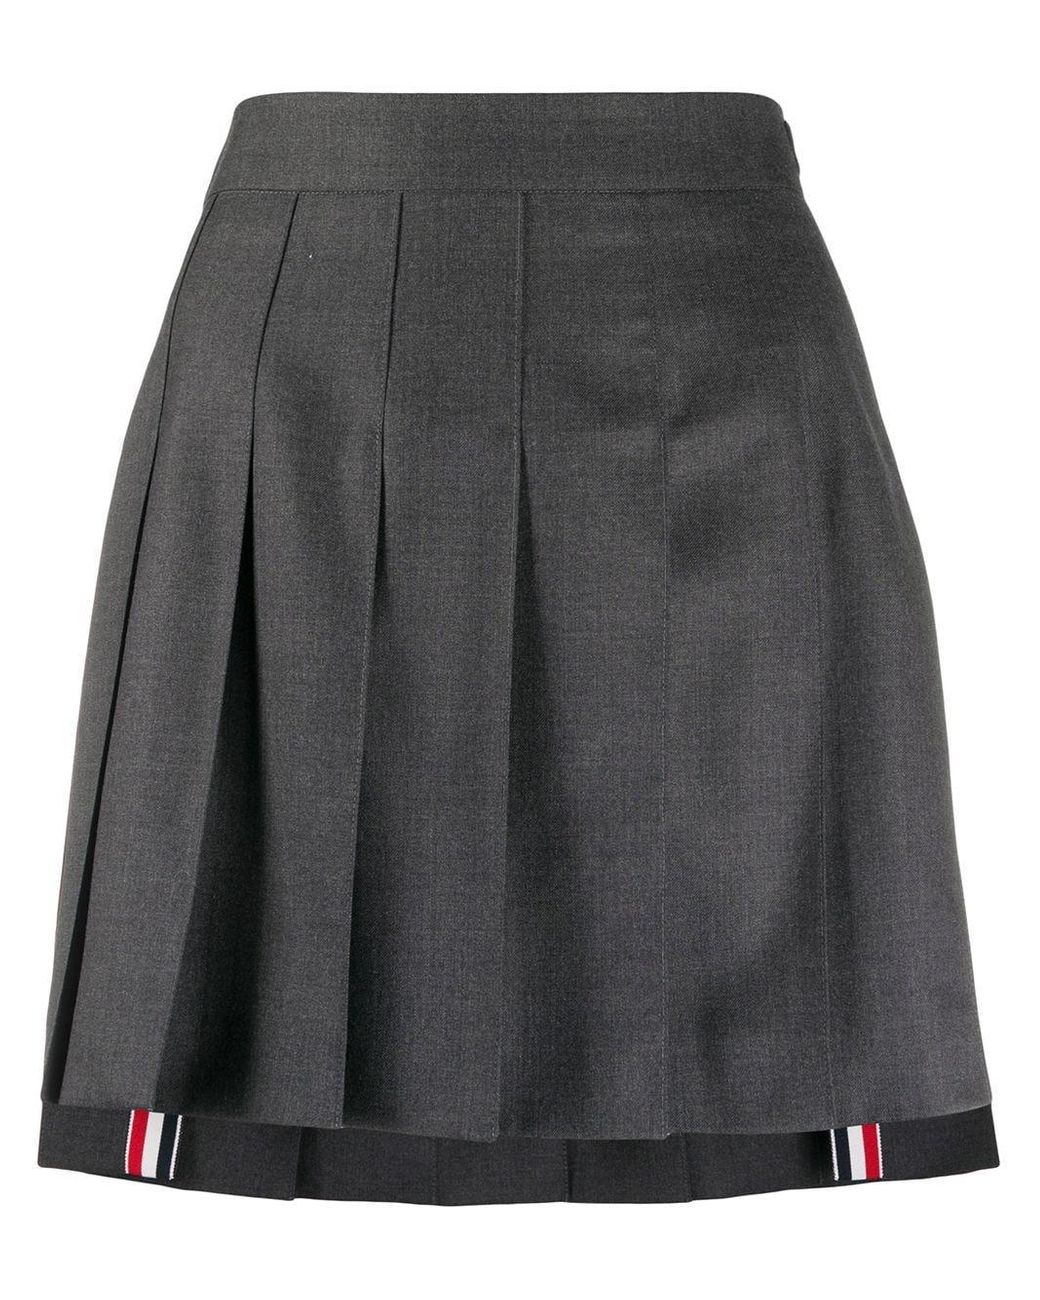 Thom Browne Wool School Uniform Pleated Skirt in Grey (Gray) - Lyst